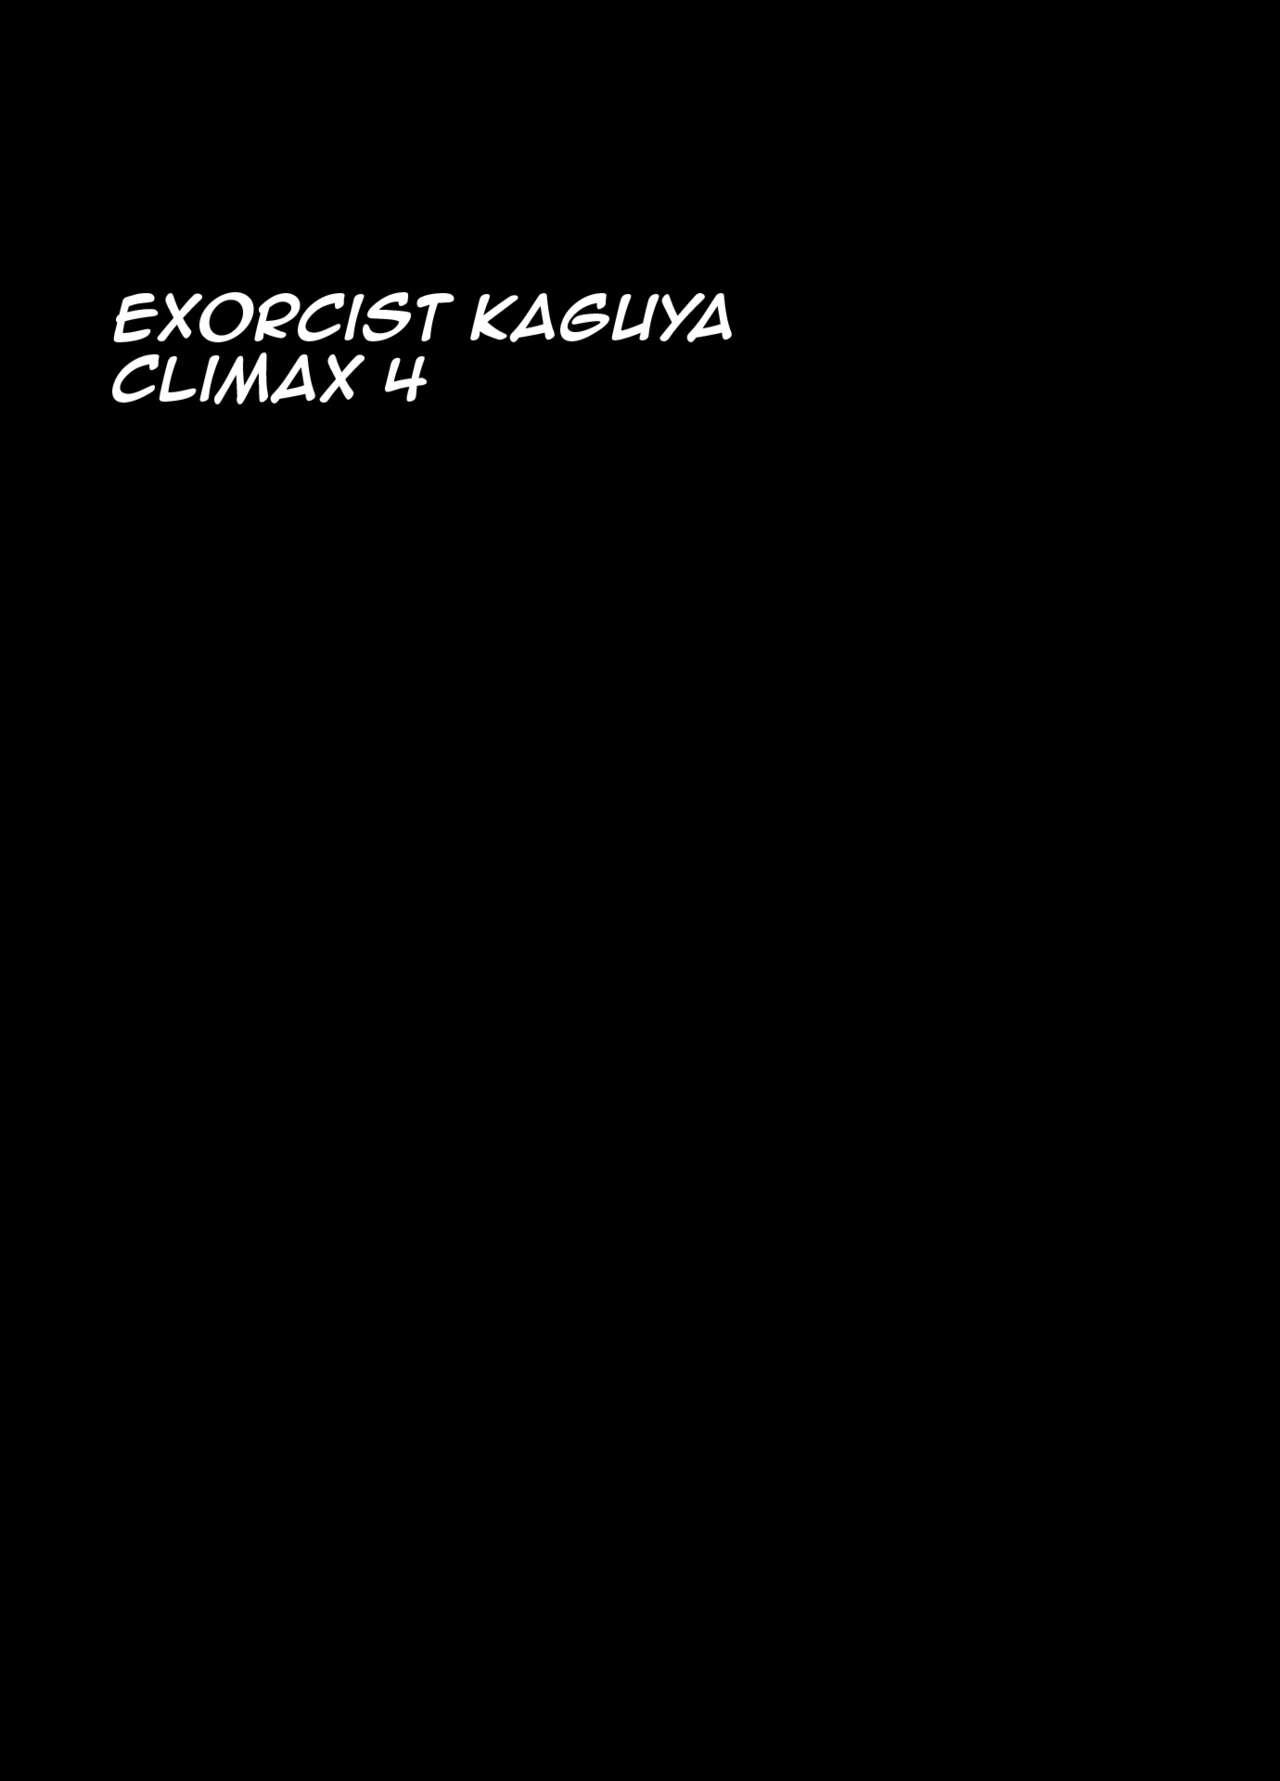 Kaguya Climax 4 13